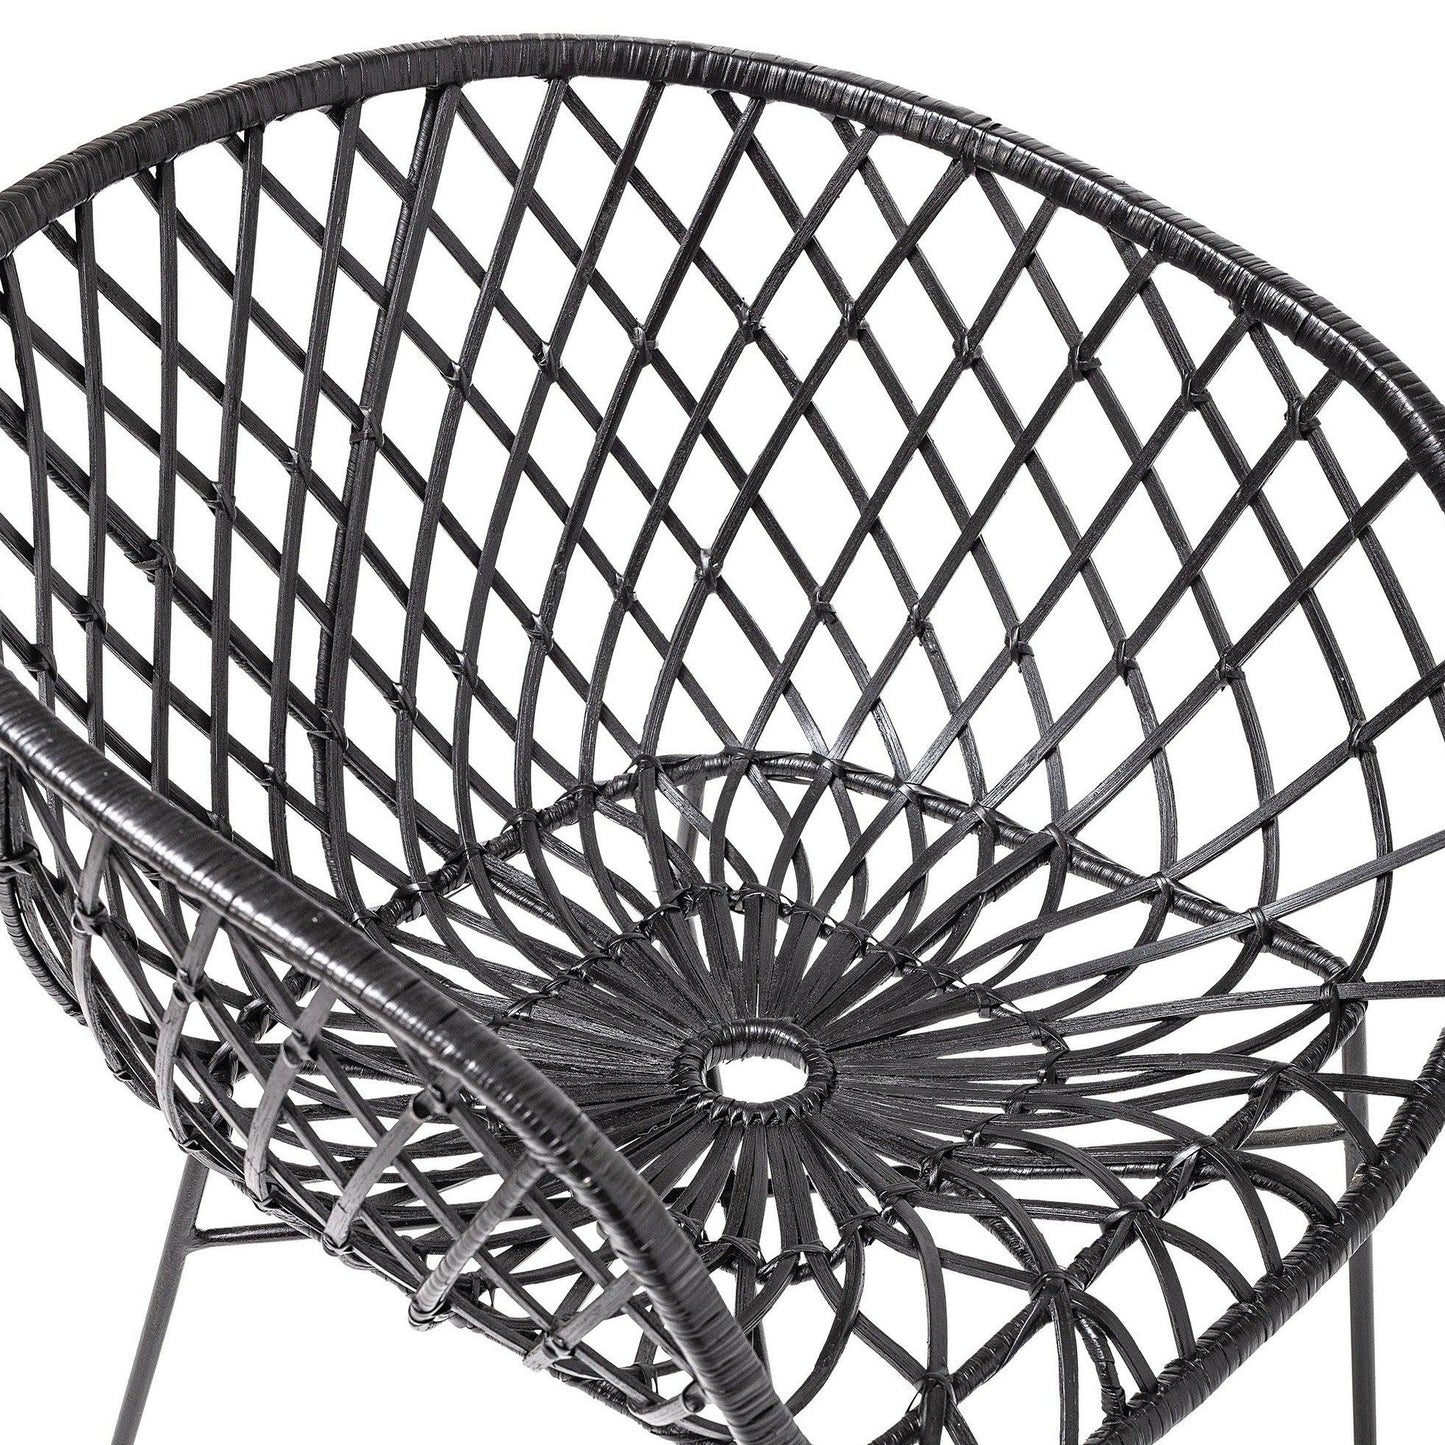 Black Rattan Chair